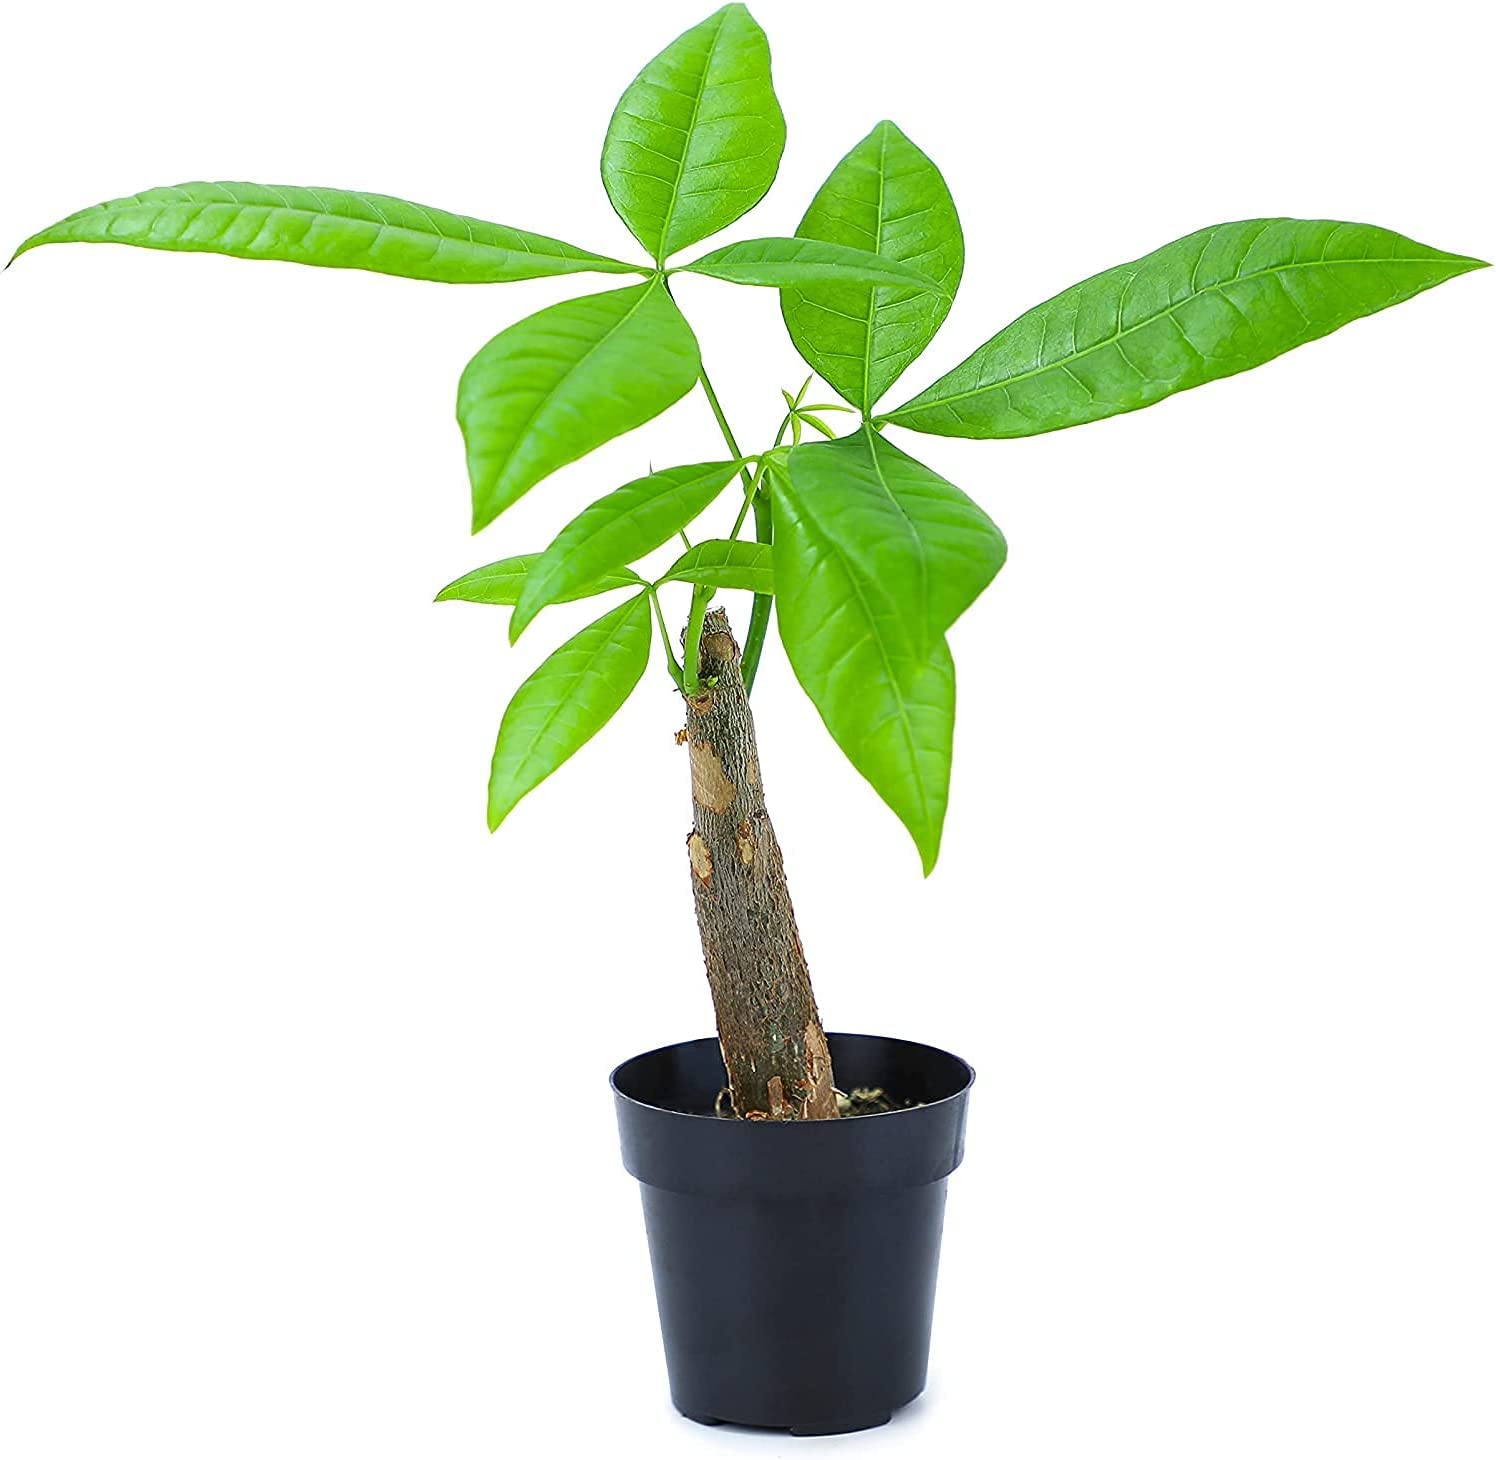 8" Altman Plants Money Tree Live Plant w/ 2.5" Grow Pot $11.86 + Free Shipping w/ Prime or on $35+